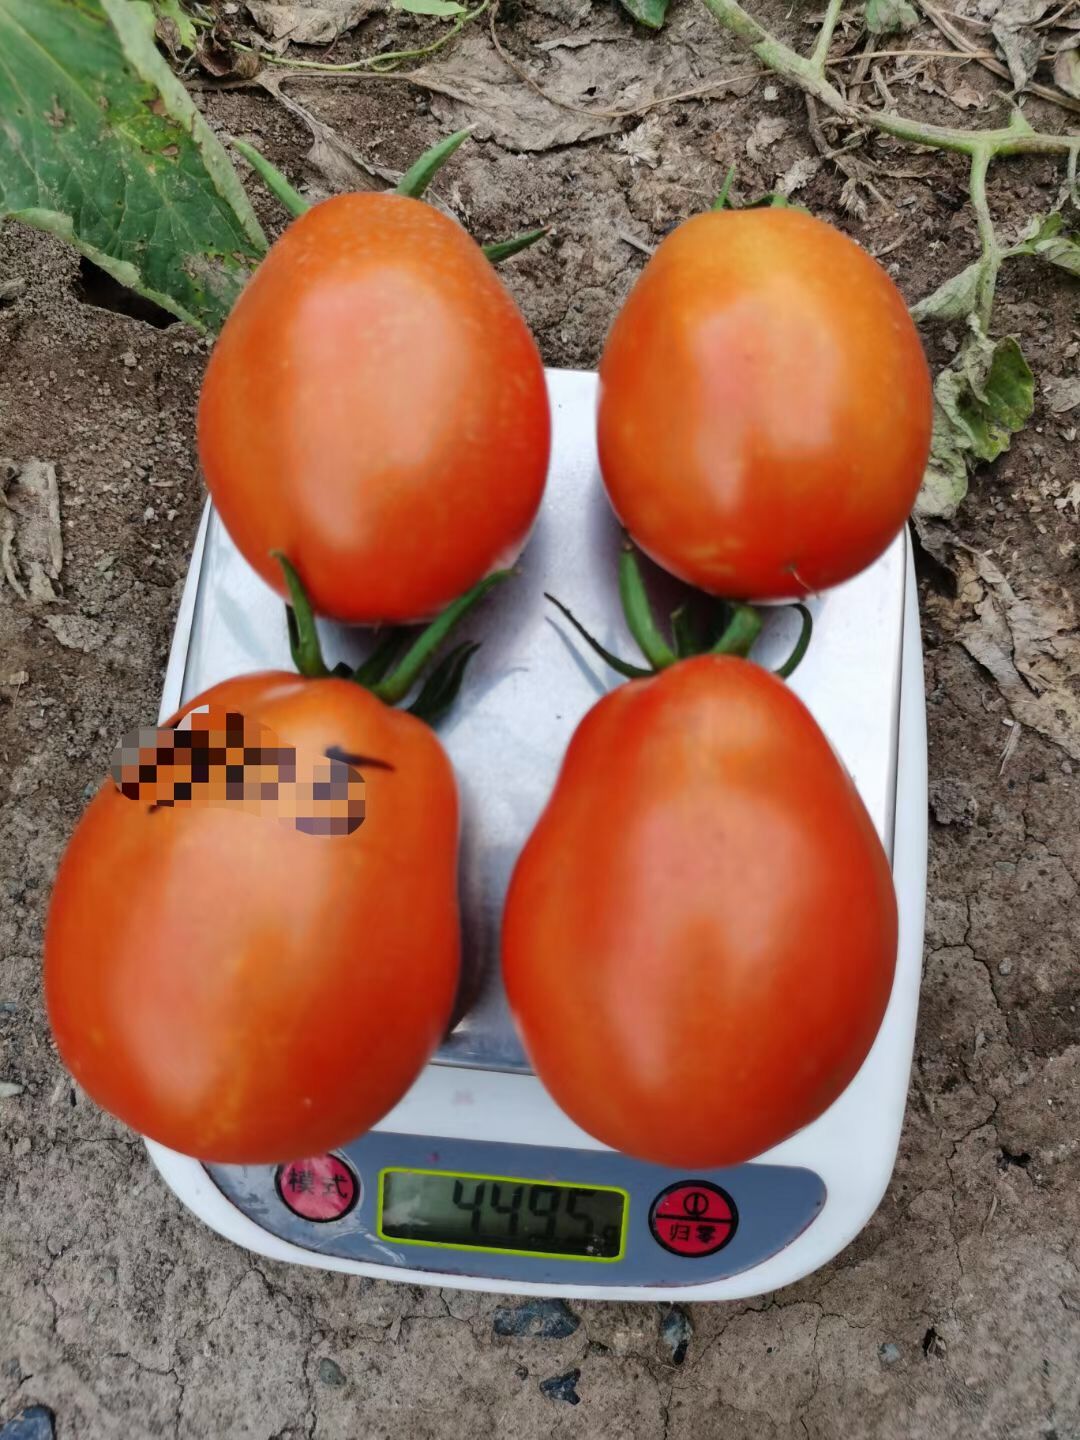 Suntoday cherry 120gr weight tomato seeds(22044)